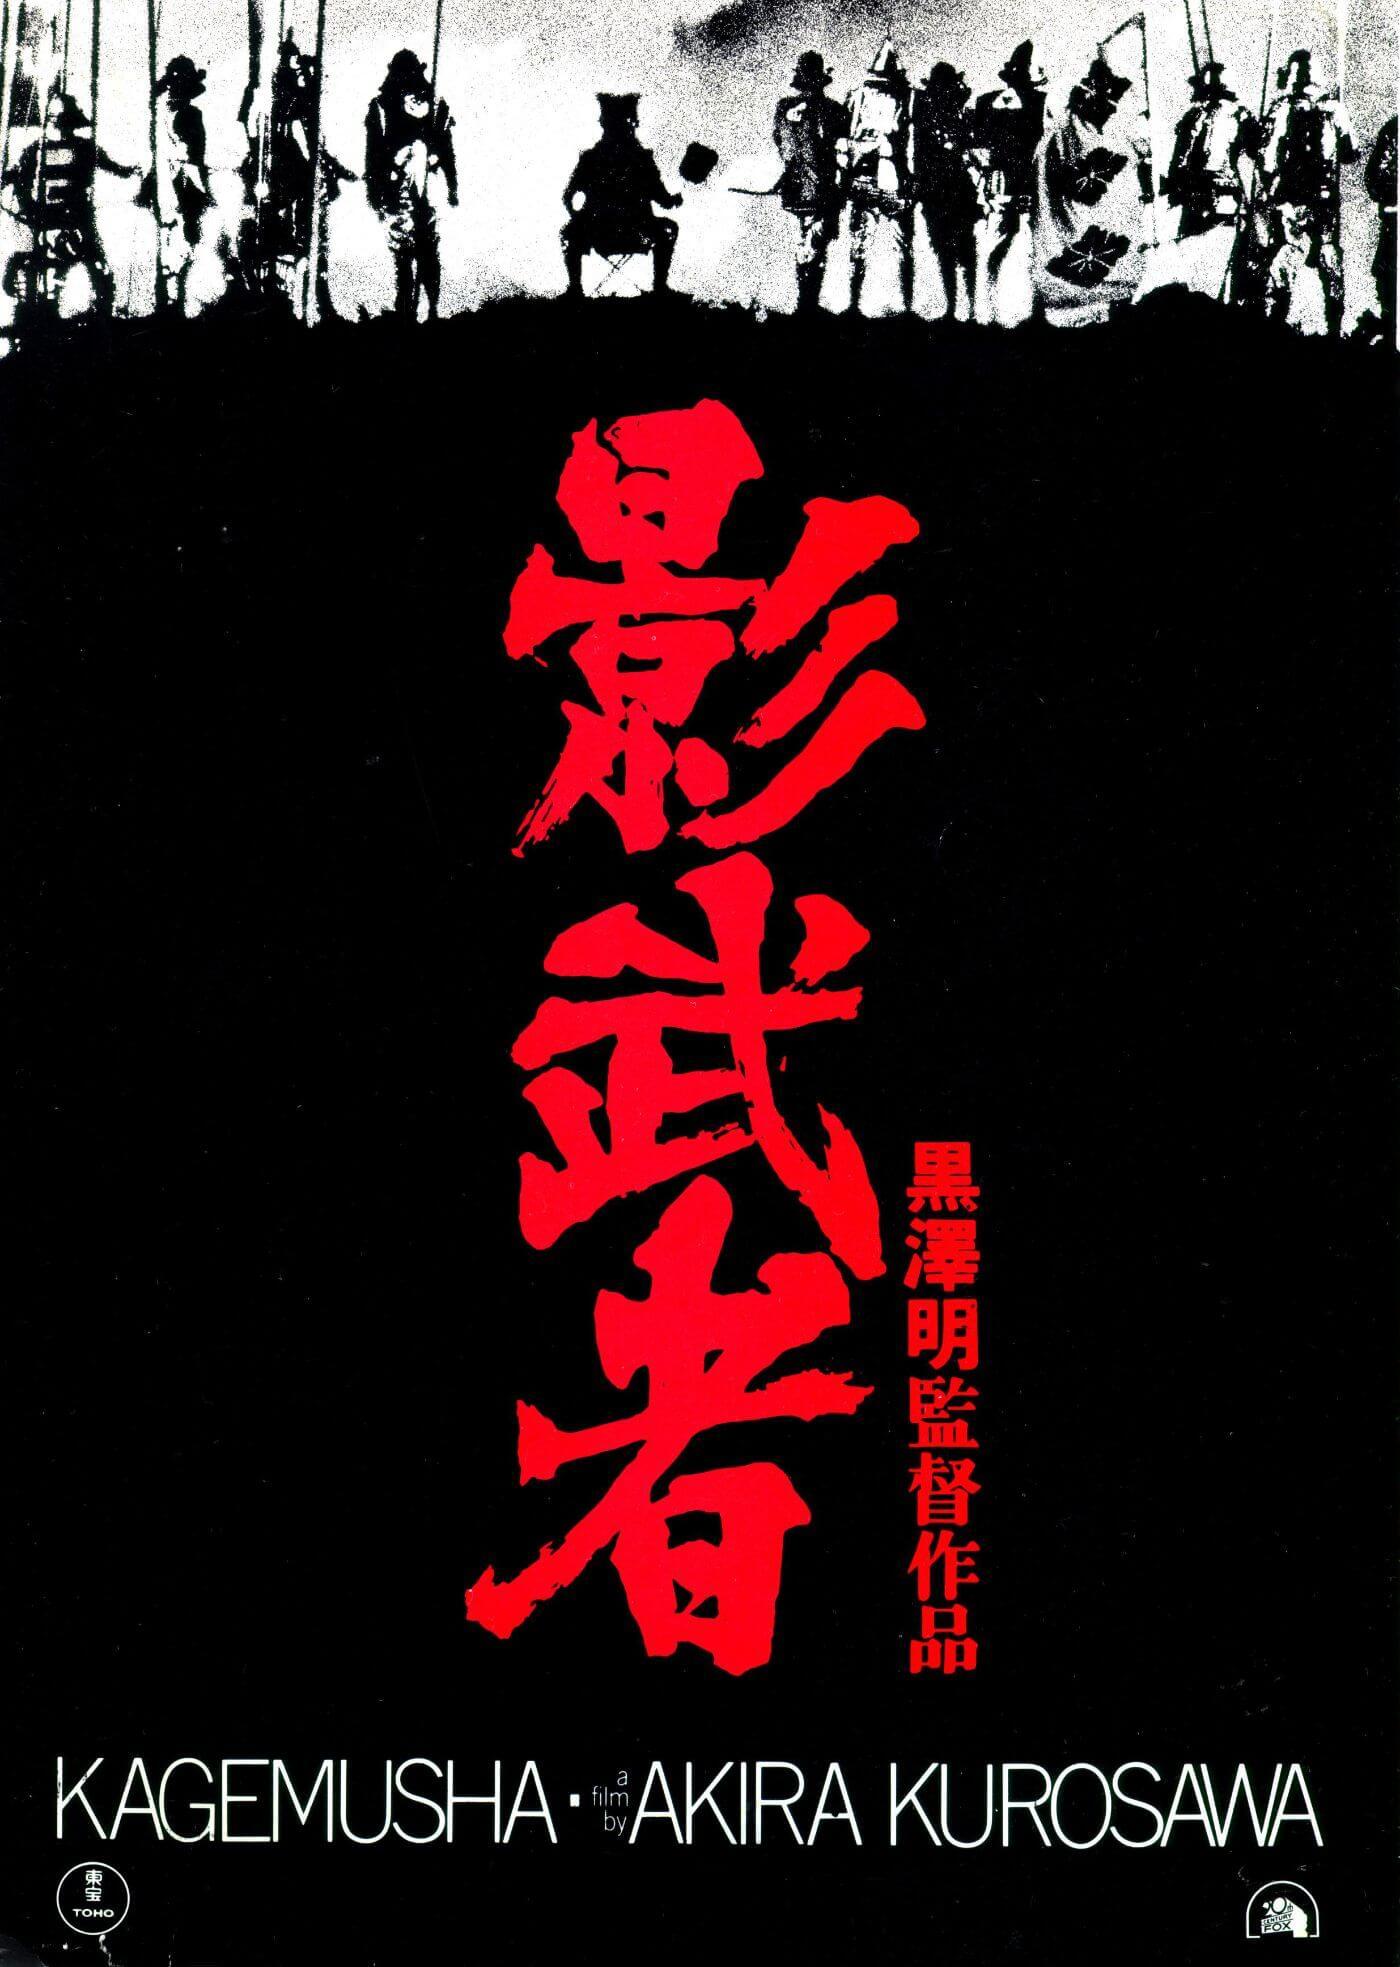 Kagemusha Akira Kurosawa Japanese Cinema Masterpiece 1980 Classic Movie Graphic Art Poster Canvas Prints By Kentura Buy Posters Frames Canvas Digital Art Prints Small Compact Medium And Large Variants